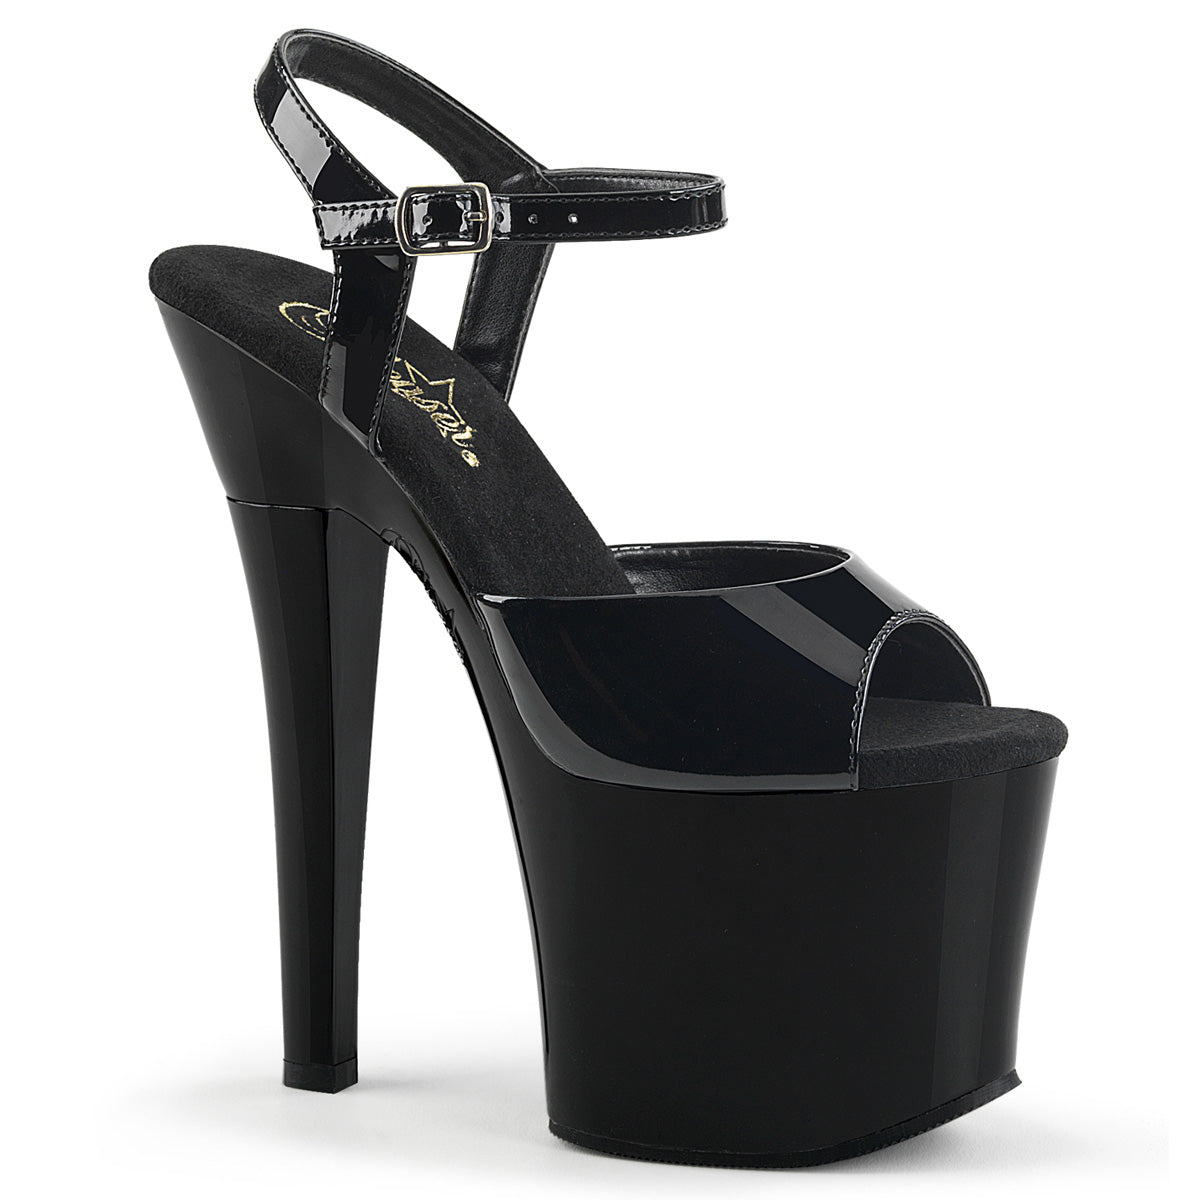 RADIANT-709 7" Heel Black Patent  Stripper Platforms High Heels